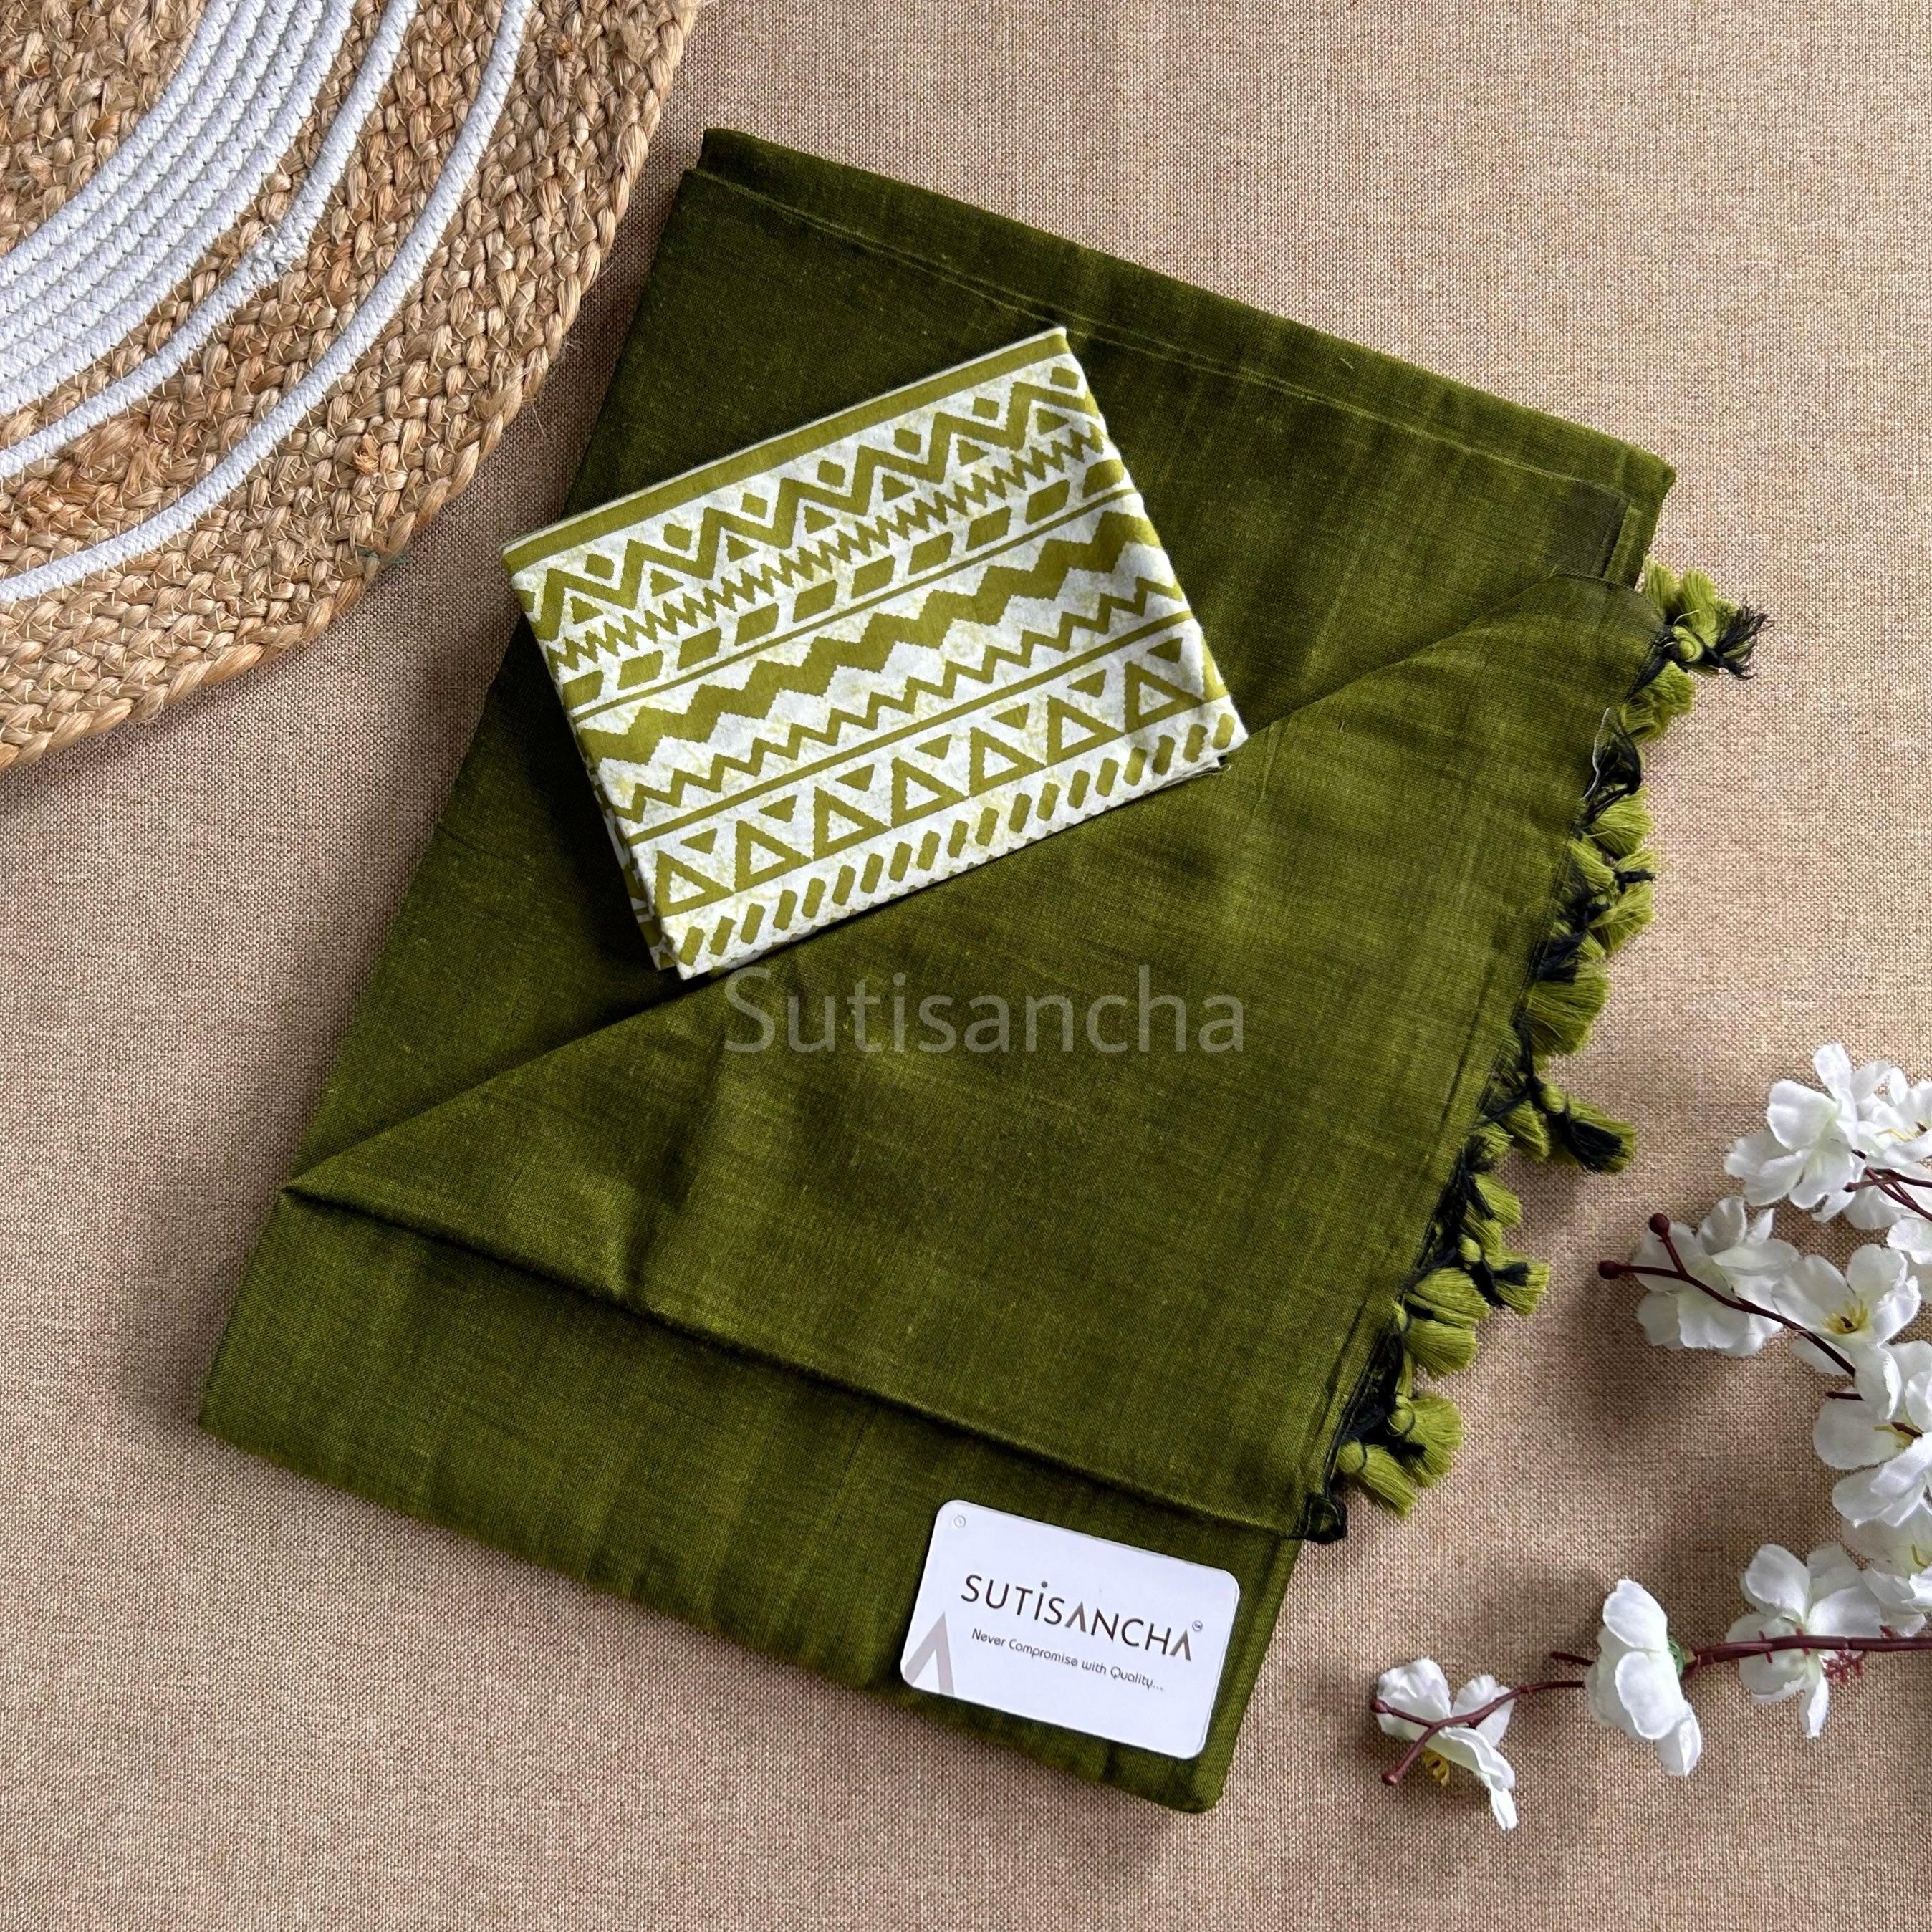 Sutisancha Mahendi Khadi with Design Blouse - Suti Sancha